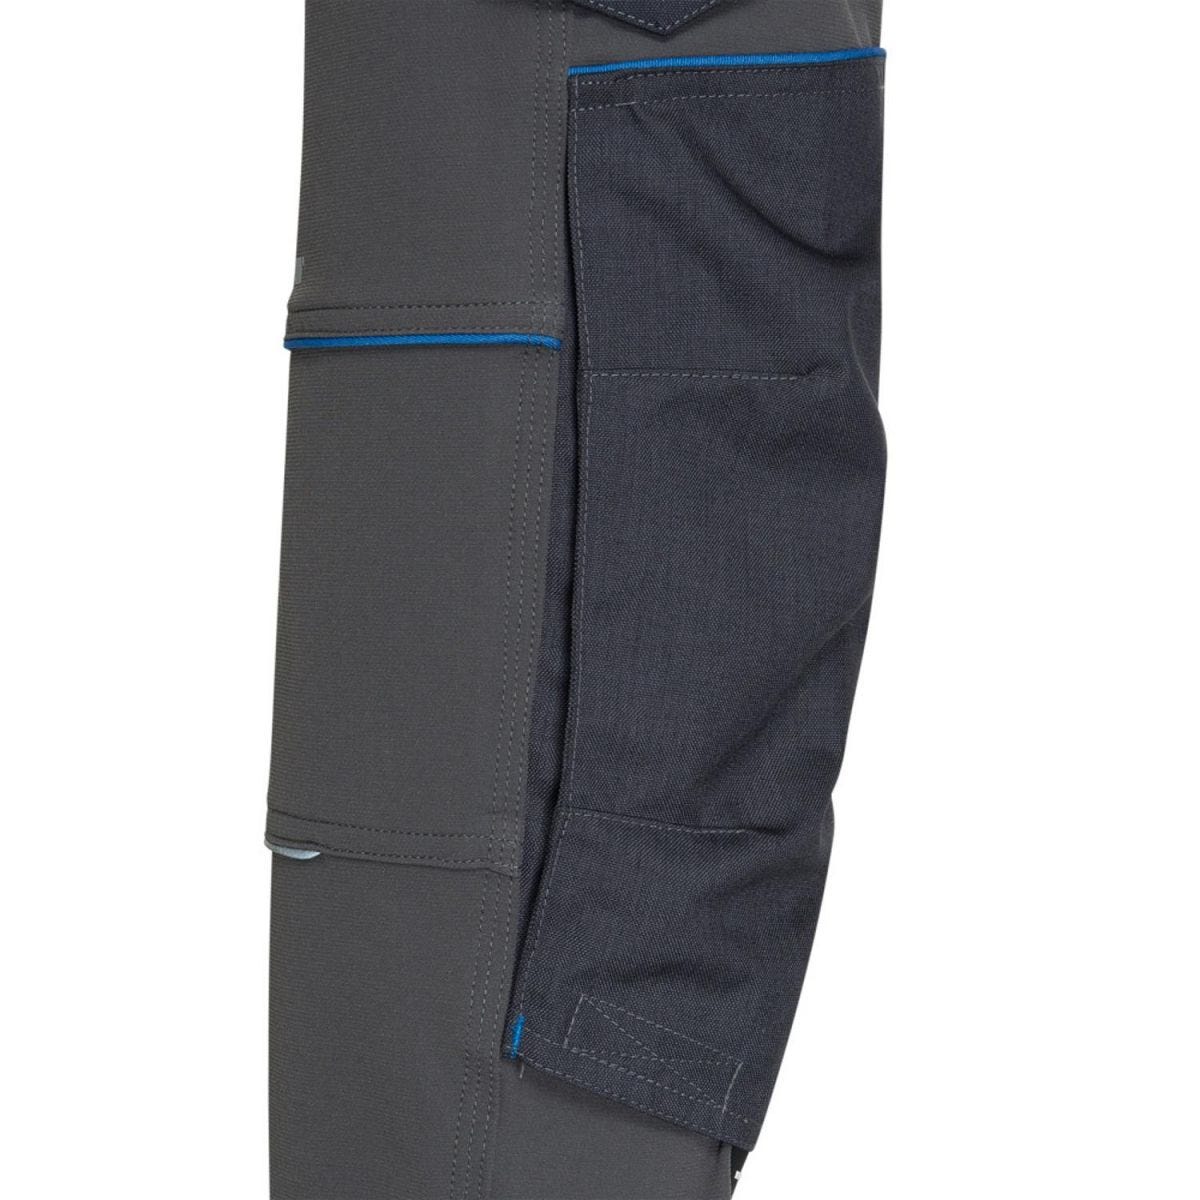 Pantalon de travail SACHA gris/bleu - North Ways - Taille 54 4